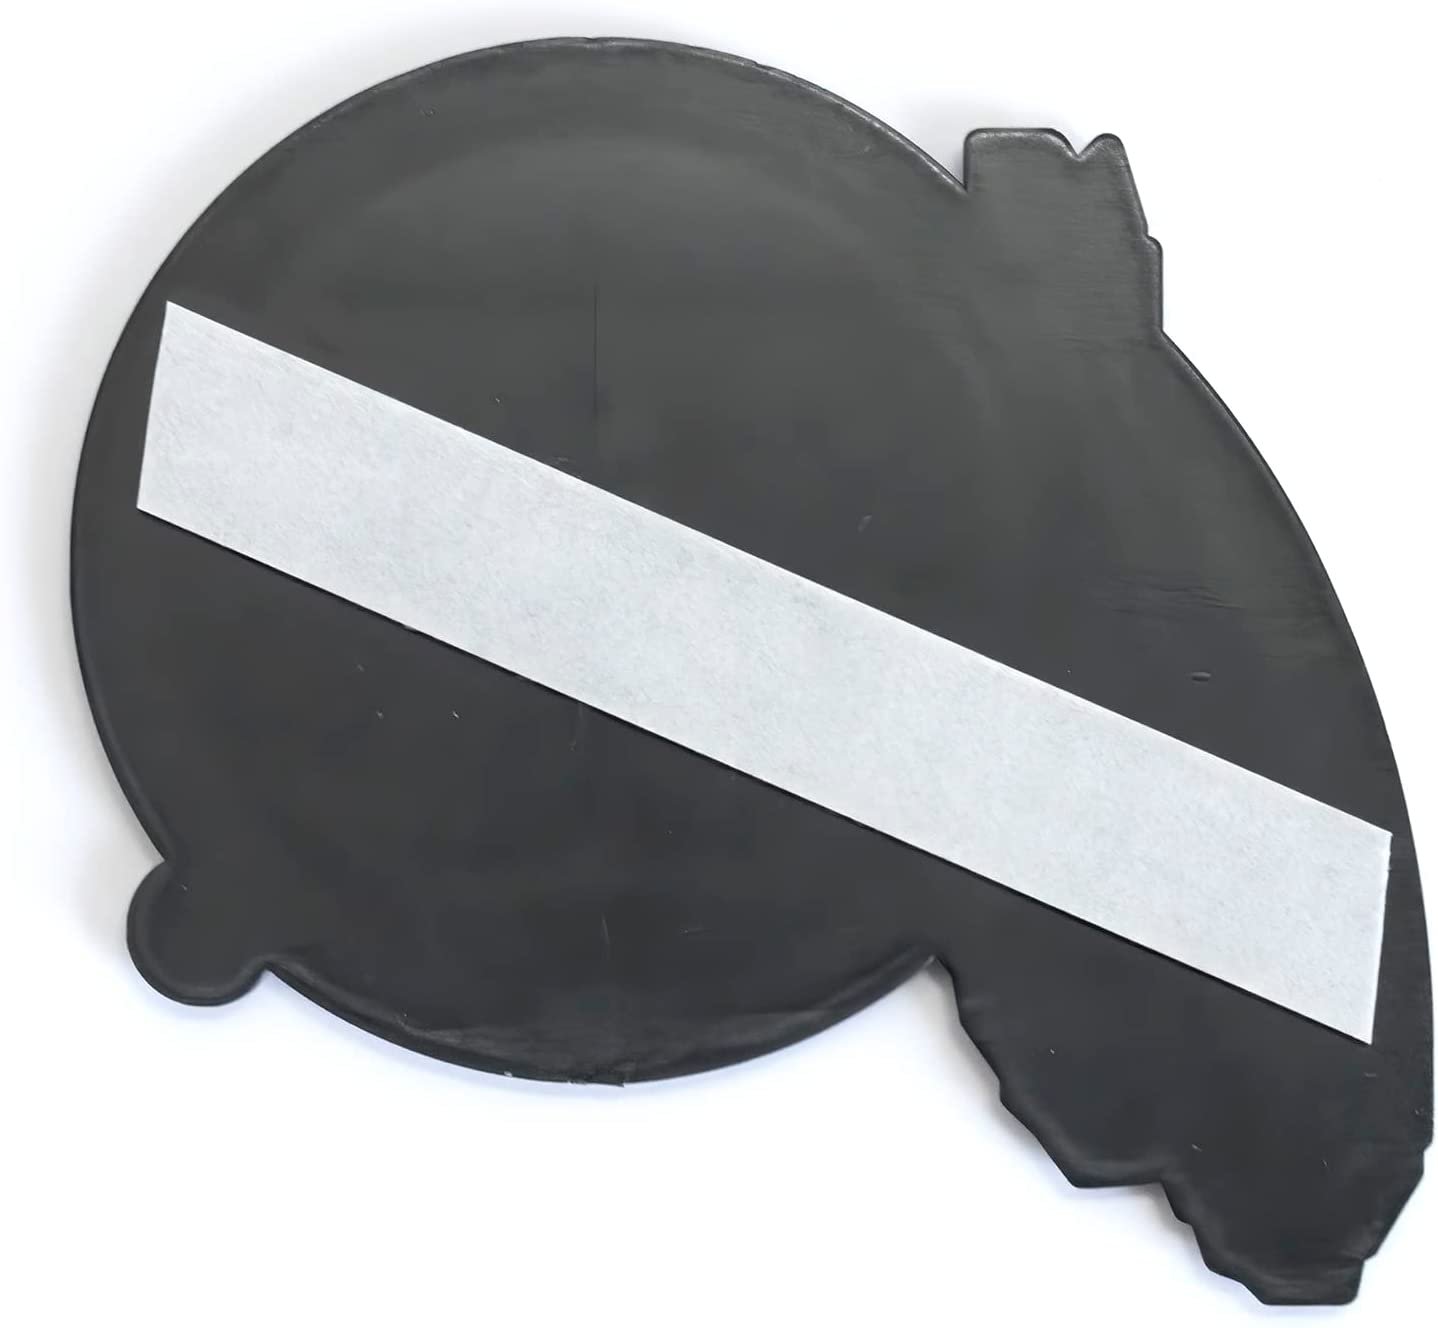 University of Texas Longhorns Auto Emblem, Silver Chrome Color, Raised Molded Plastic, Adhesive Tape Backing